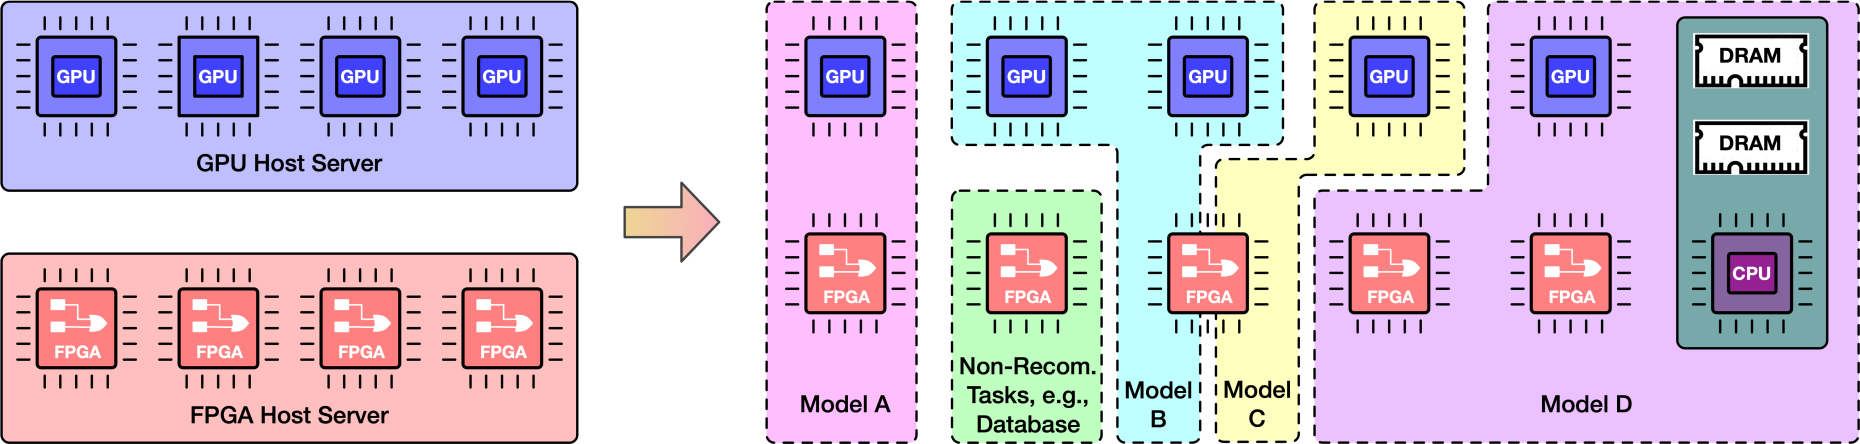 FleetRec: a hybrid CPU, GPU, FPGA cluster for recommendation inference.